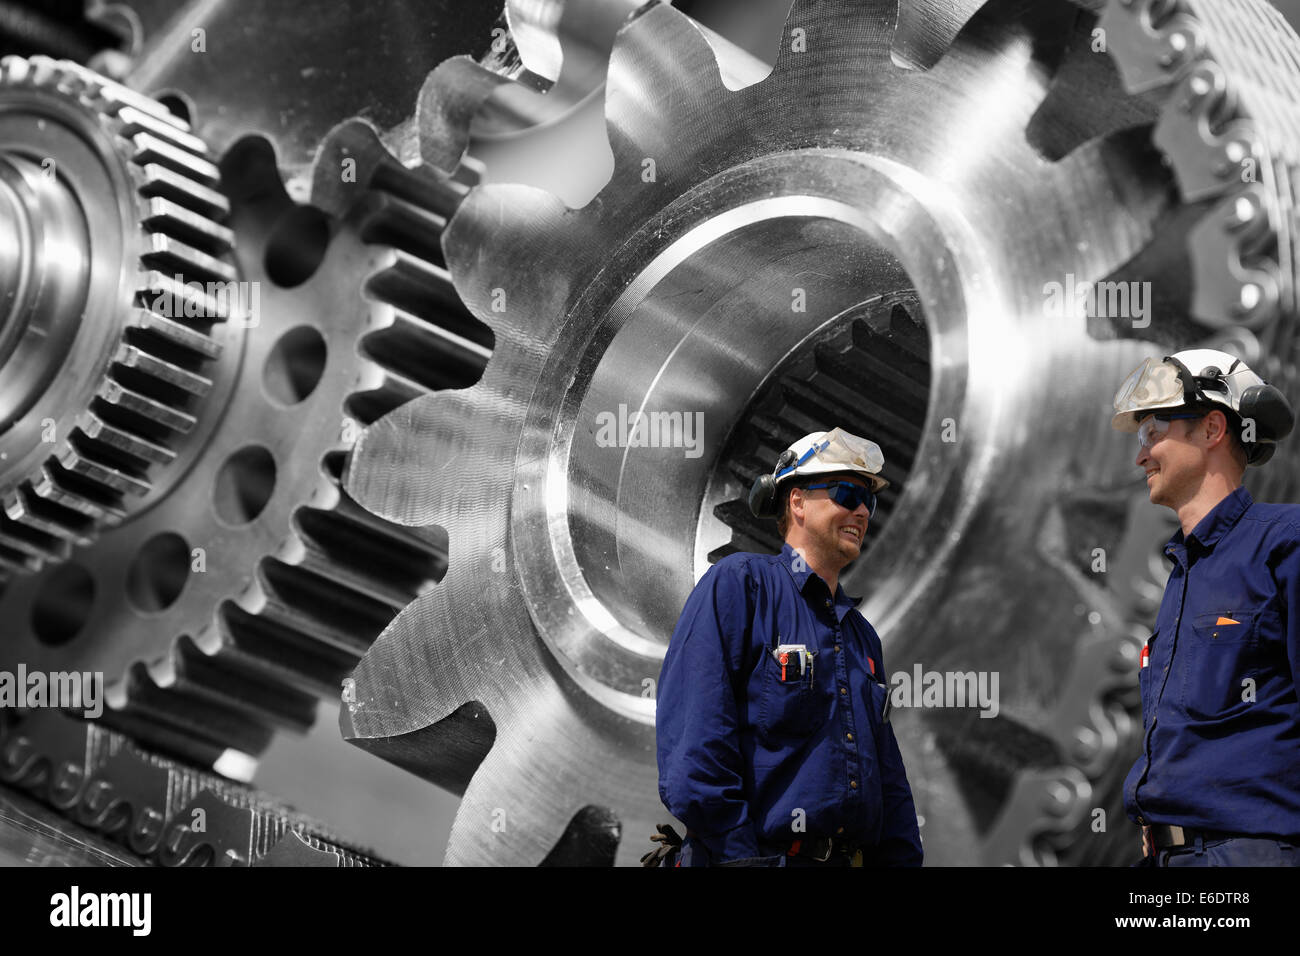 mechanics, engineers and giant cogwheel machinery Stock Photo